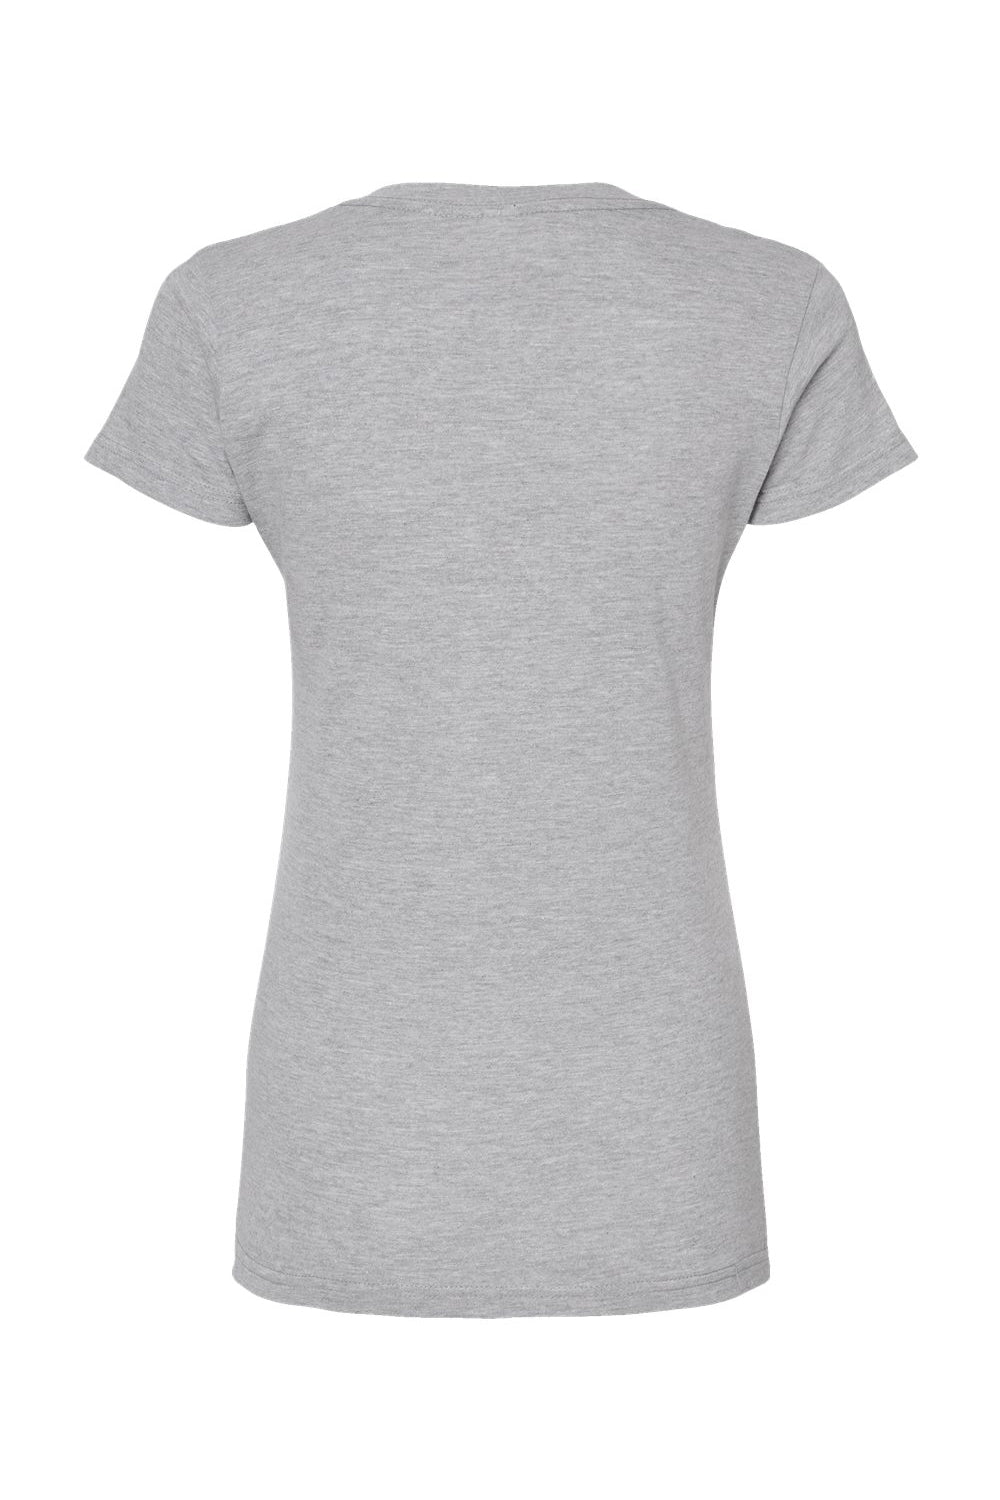 Tultex 214 Womens Fine Jersey Short Sleeve V-Neck T-Shirt Heather Grey Flat Back